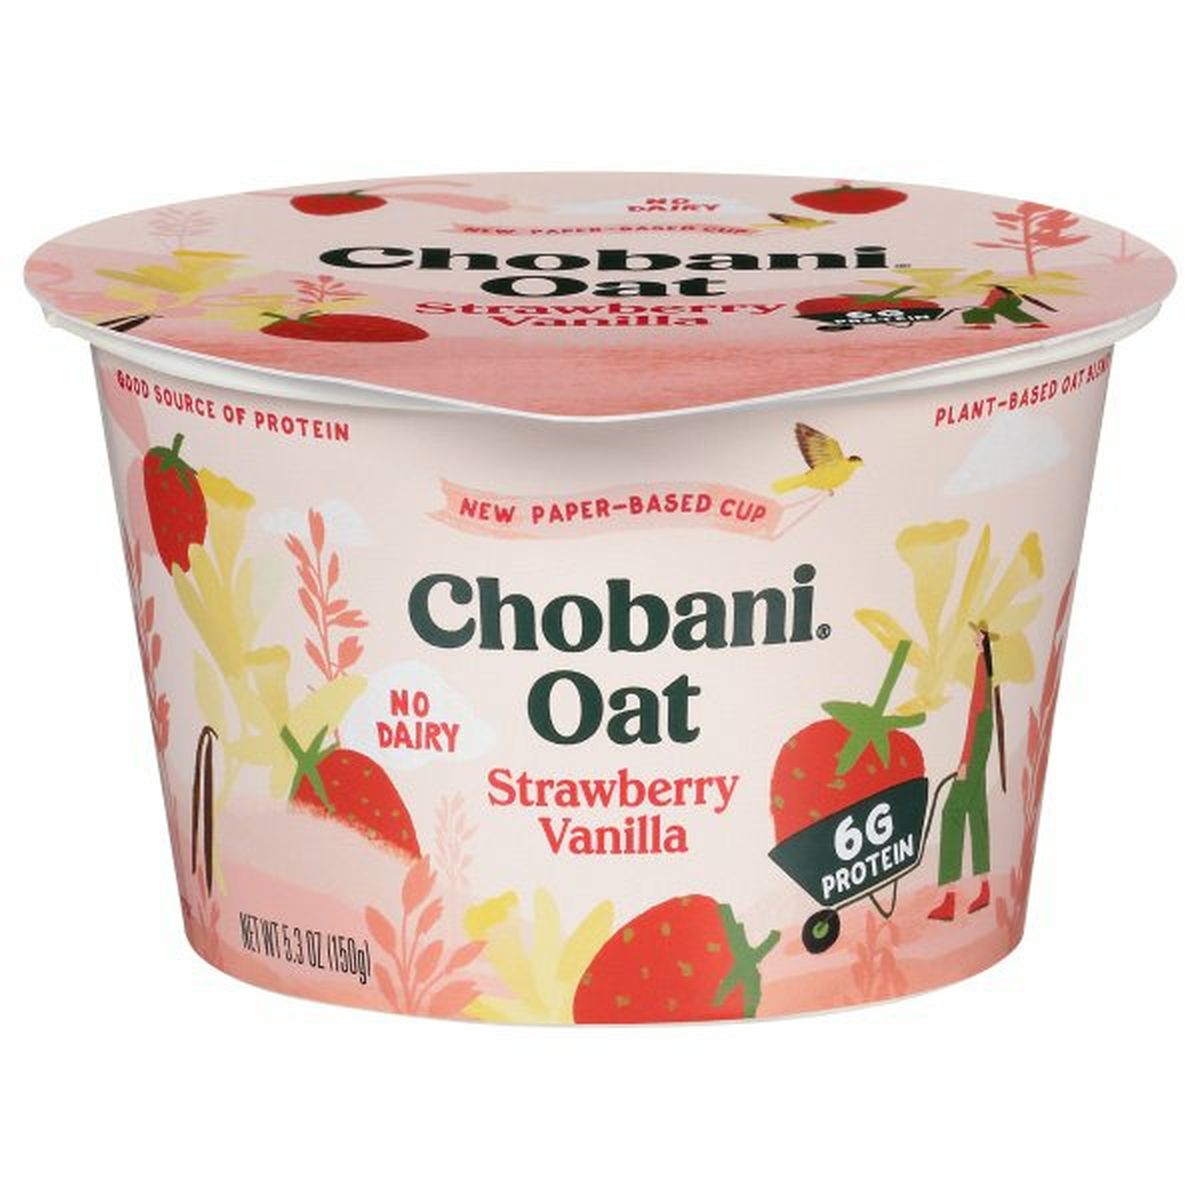 Calories in Chobani Oat, Strawberry Vanilla